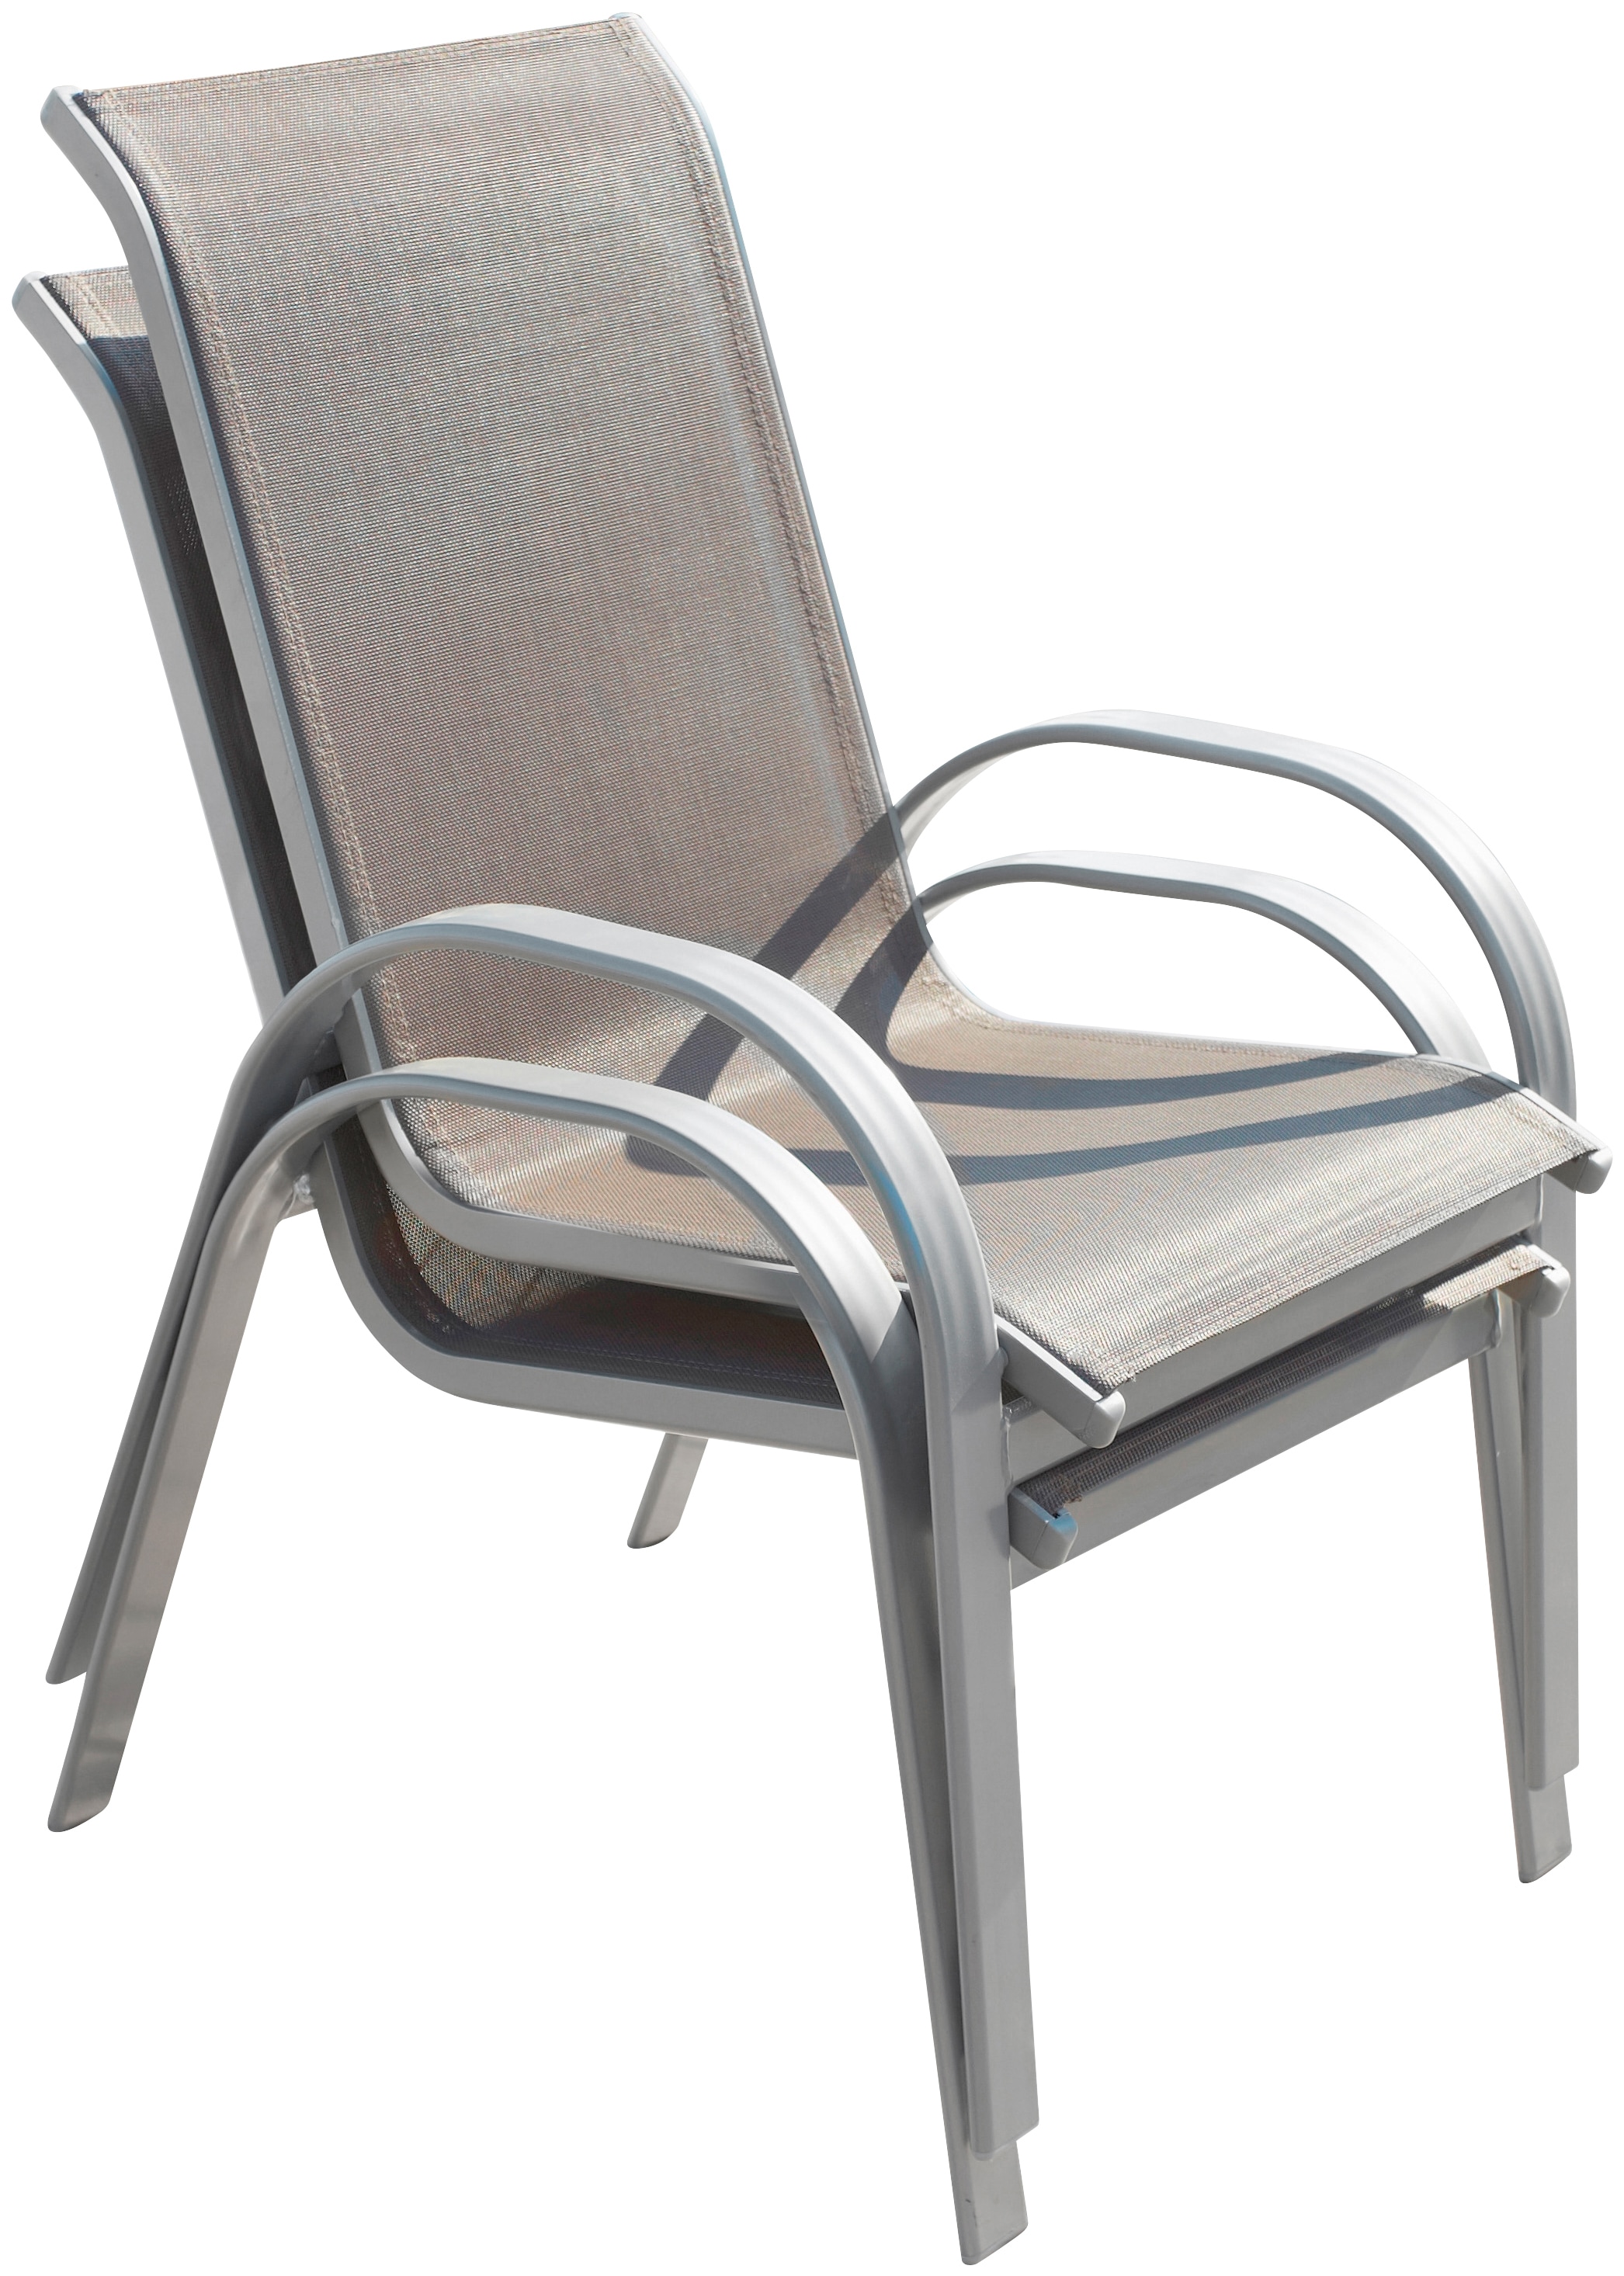 MERXX Garten-Essgruppe »Amalfi«, (5 tlg.), 4 Sessel, Tisch ausziehbar 90x120 -180 cm, Alu/Textil | BAUR